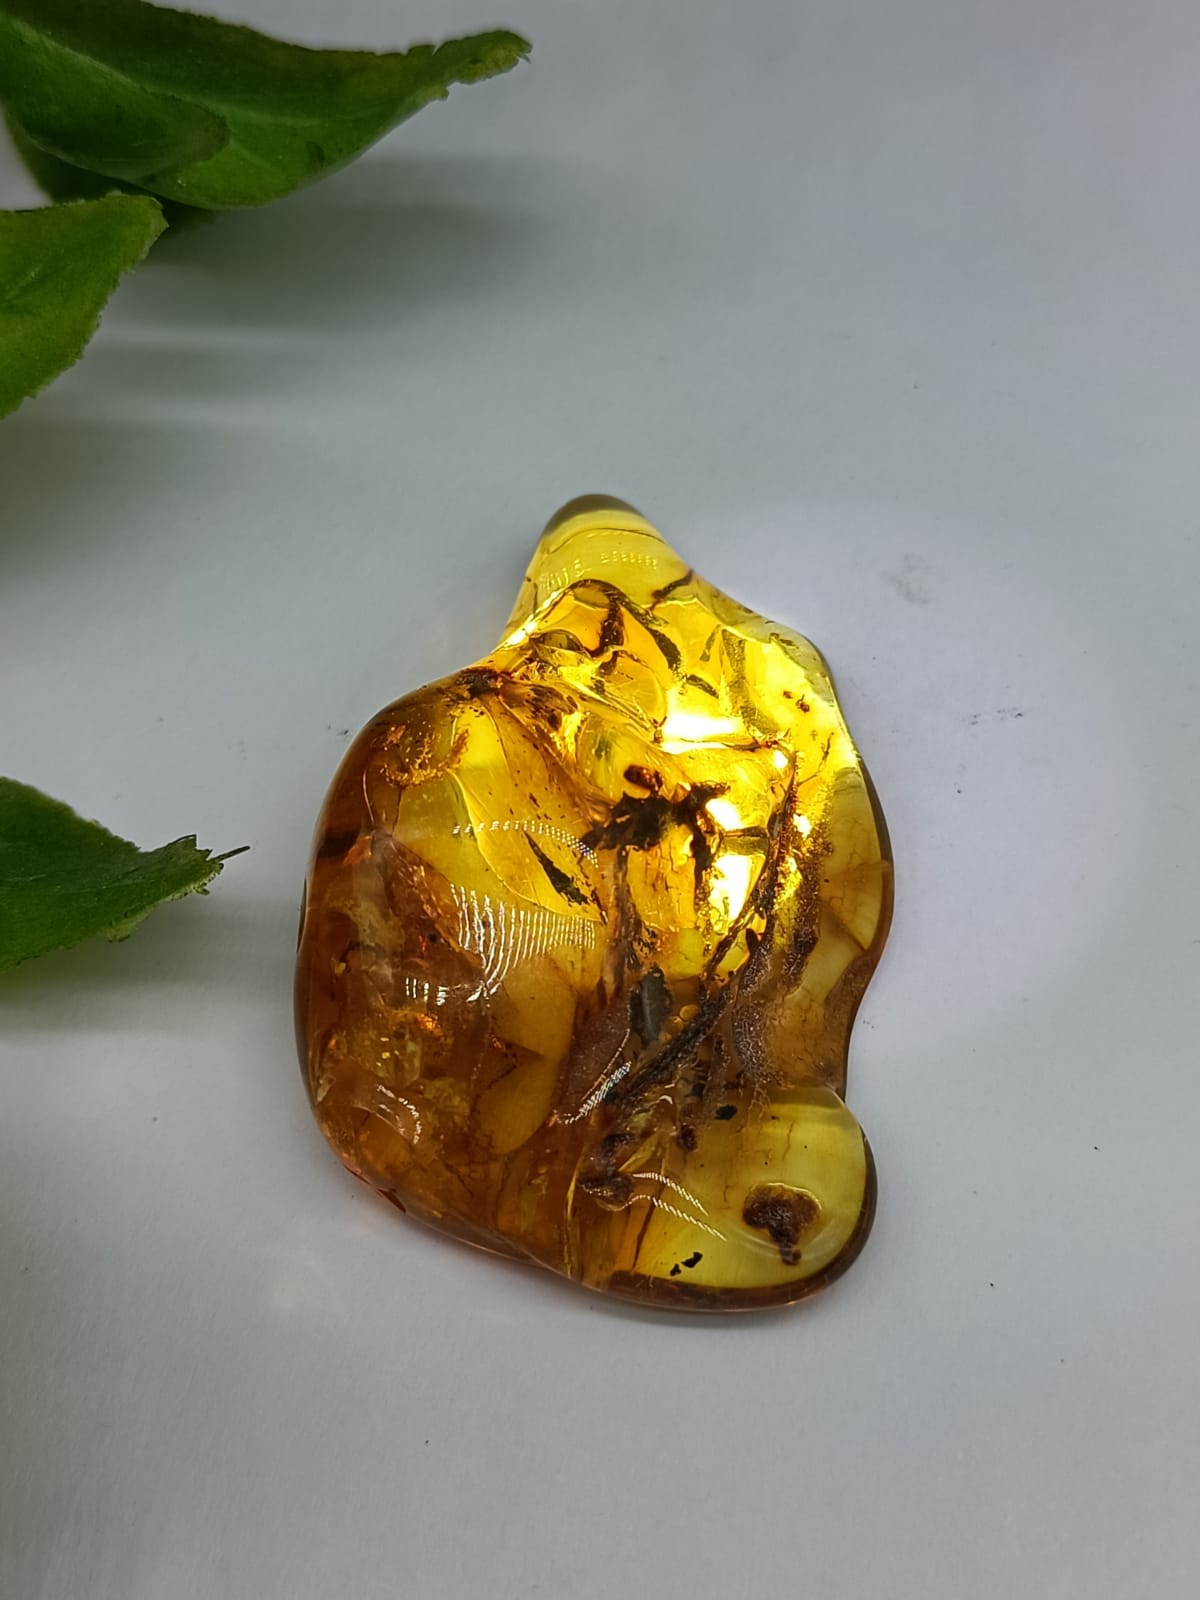 Baltic Amber Polished

